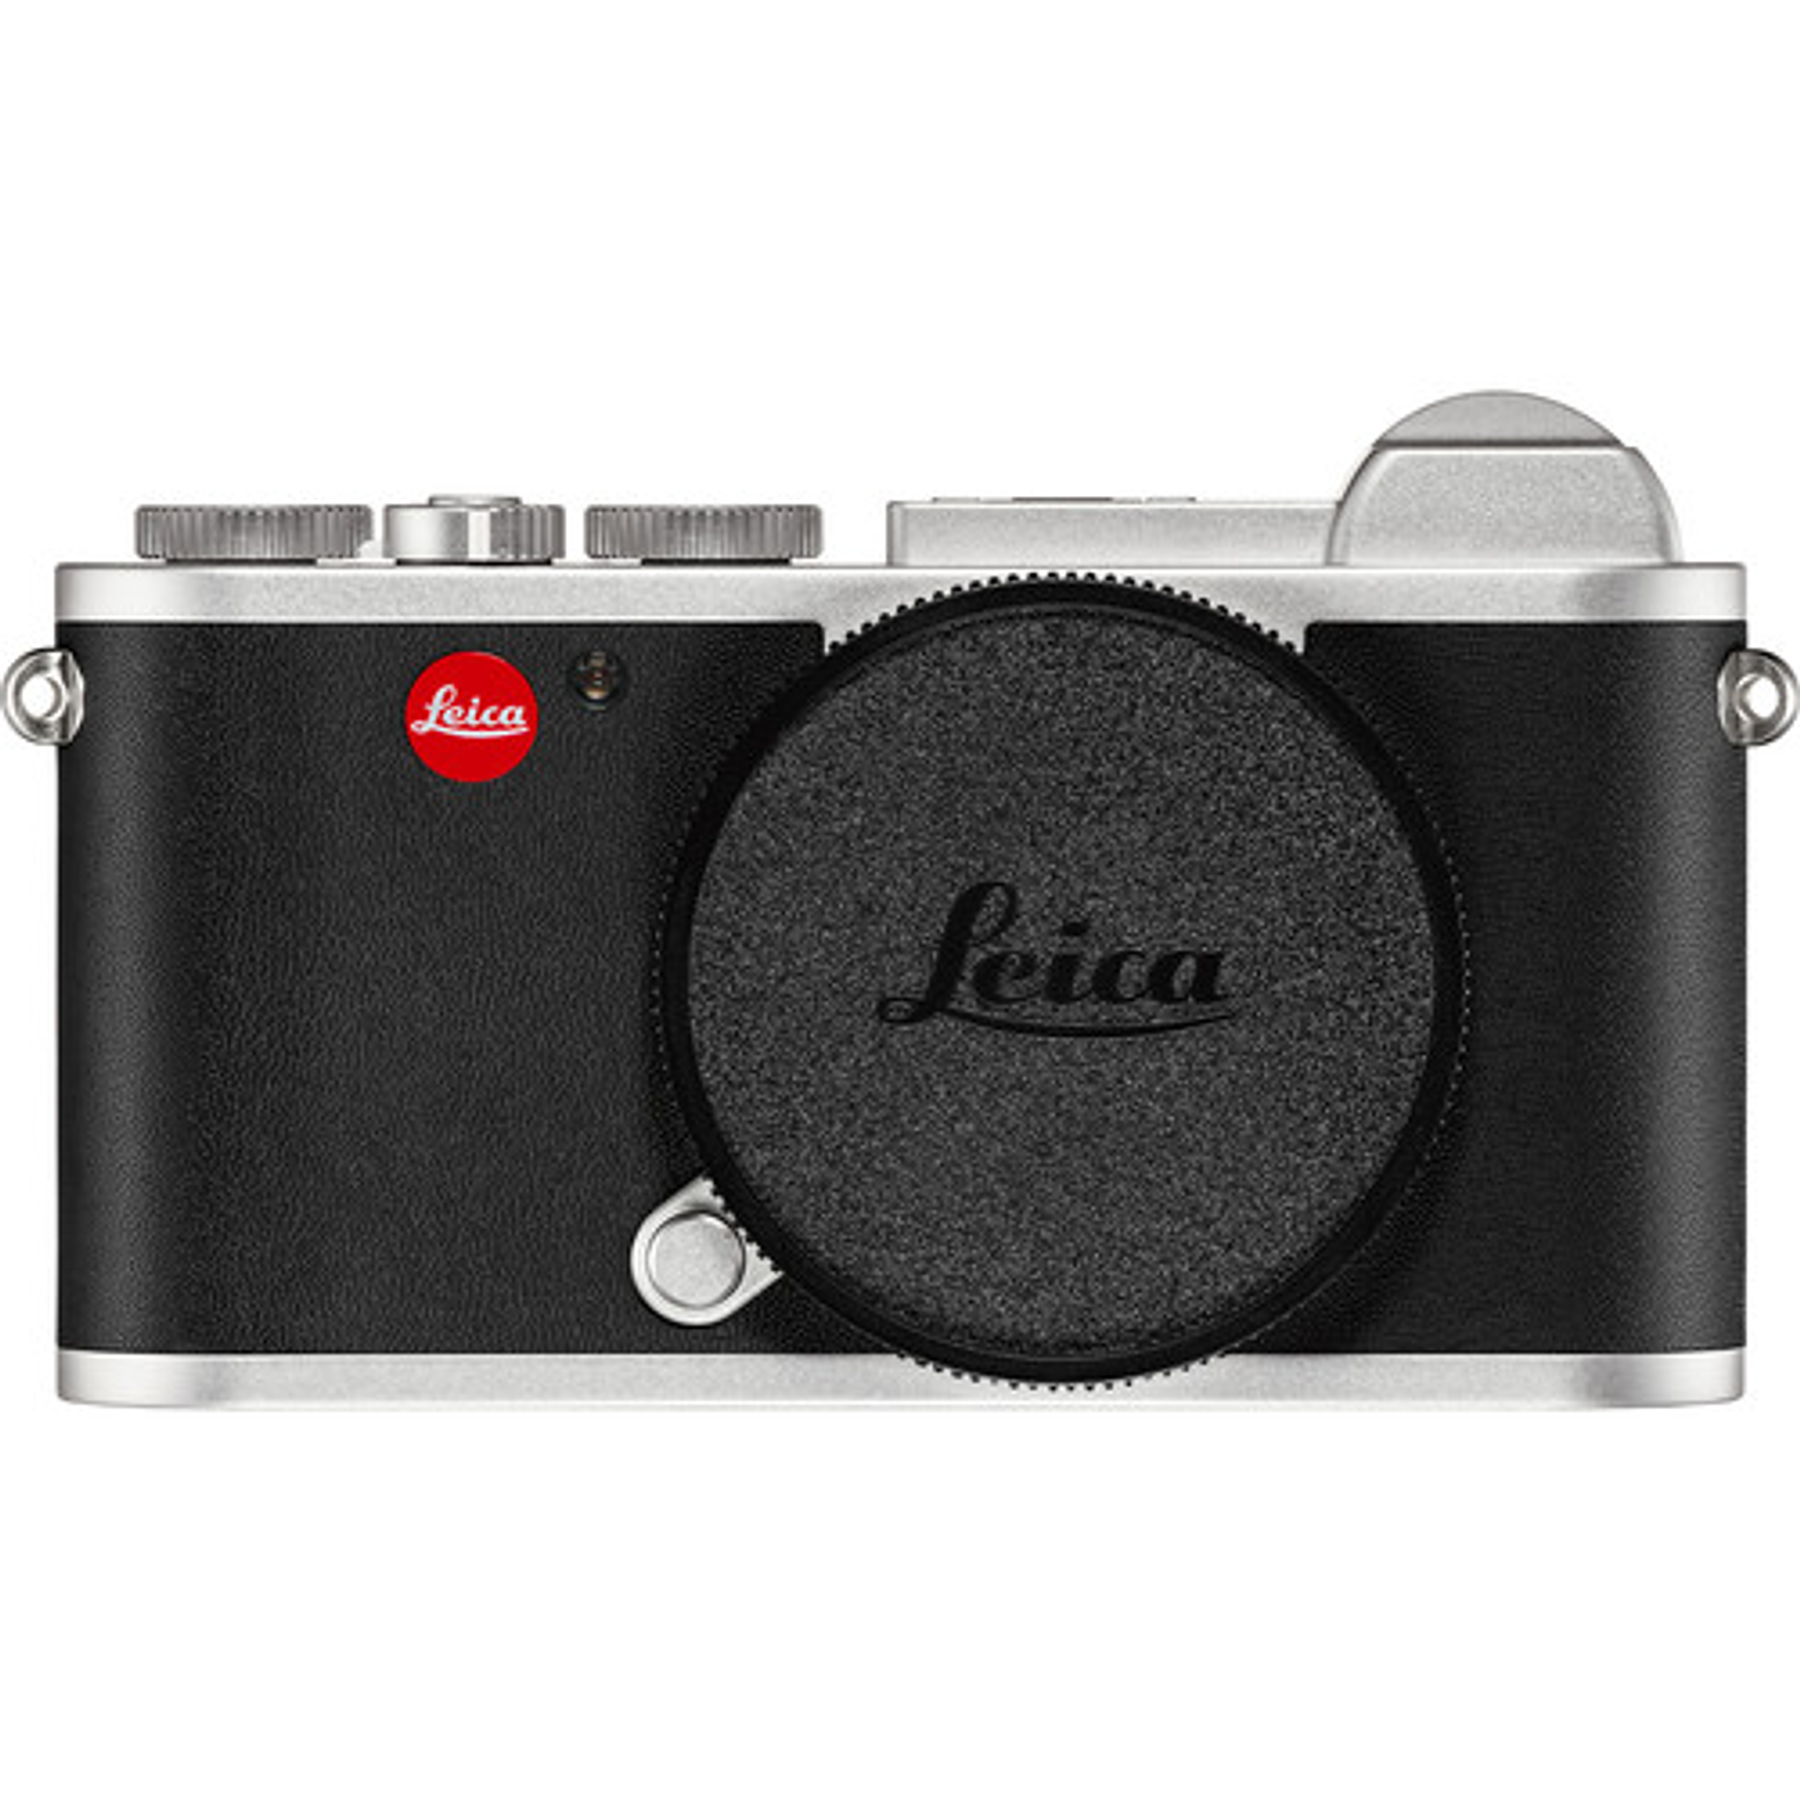 Leica CL Mirrorless (Body Silver)